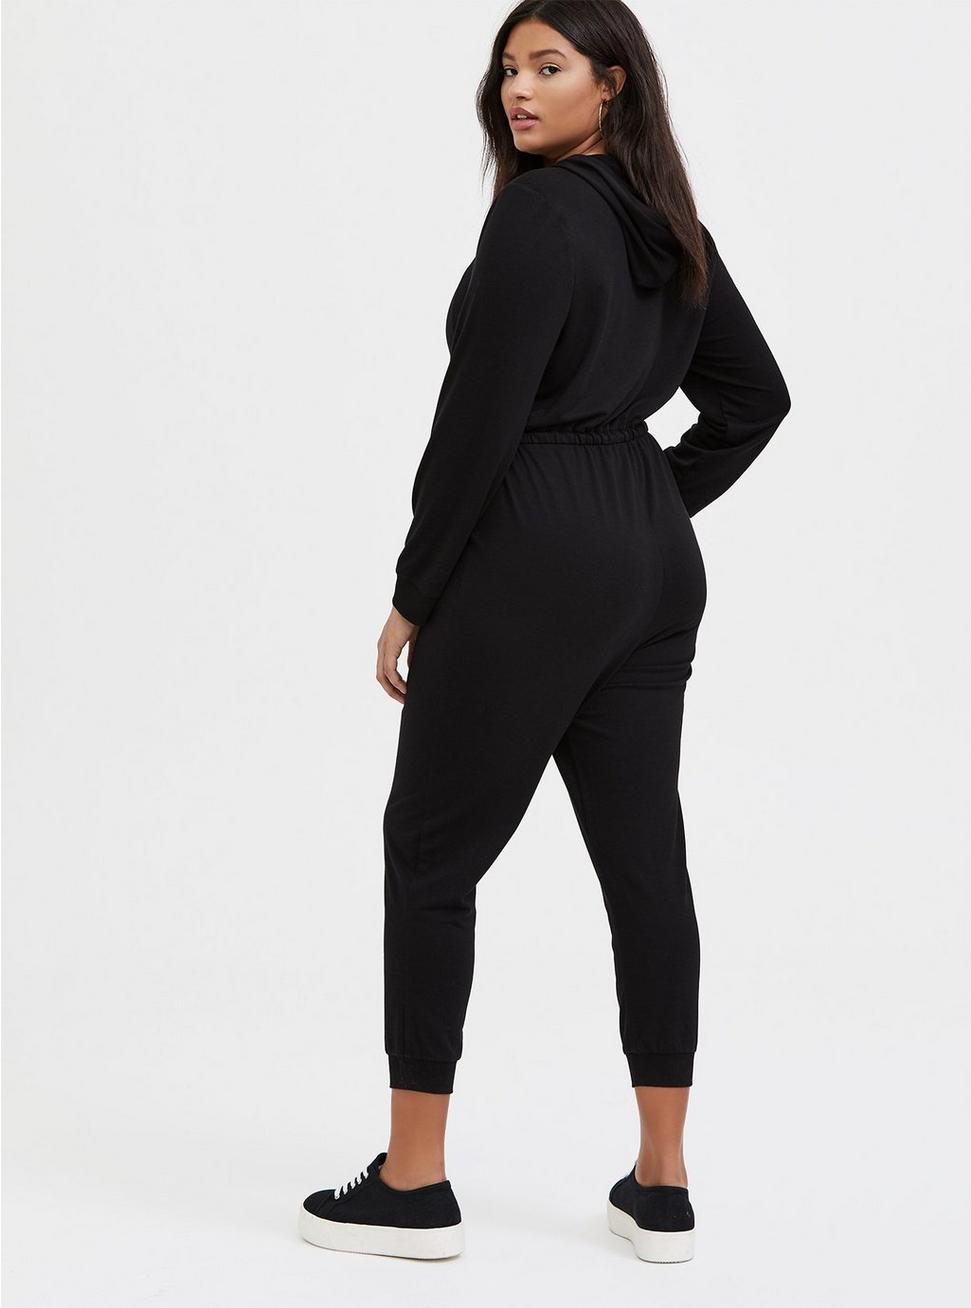 Plus Size - Black Terry Zip Front Hooded Jumpsuit - Torrid